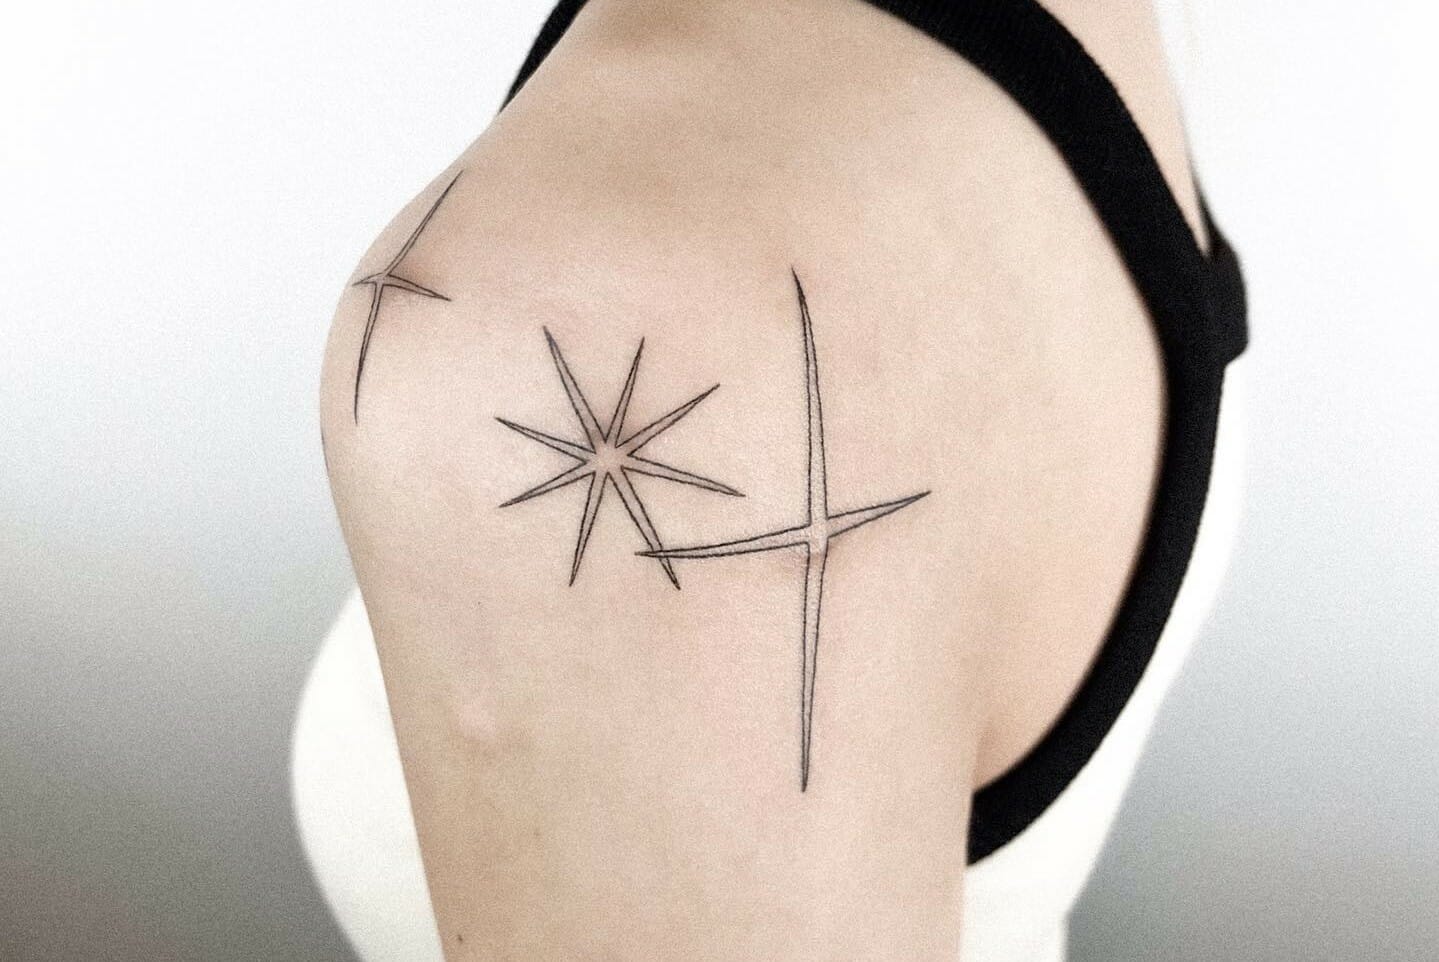 From Scar to Art: The Power of Tattoo Cover-Up | by Anastasiia Koviazina |  Medium